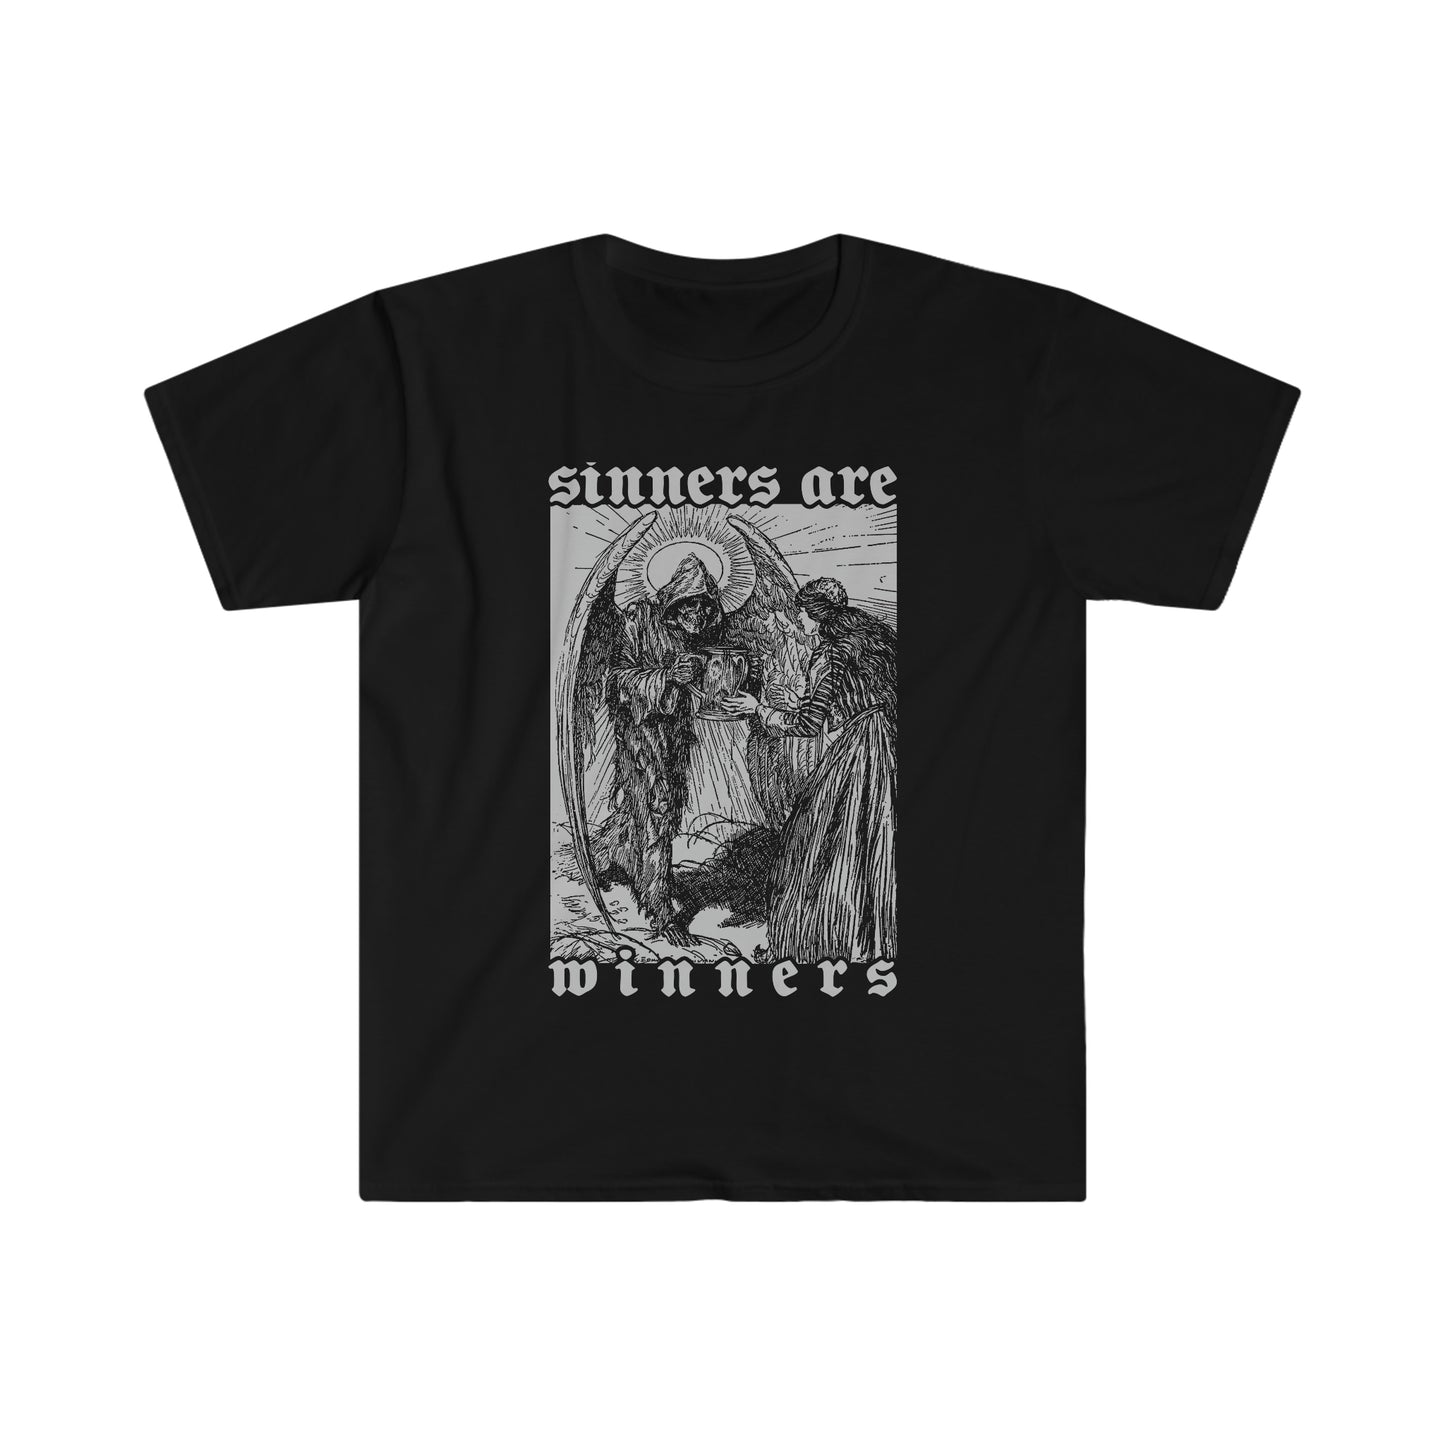 Sinners Are Winners Goth Y2k Clothing Alt Aesthetic Goth Punk T-Shirt